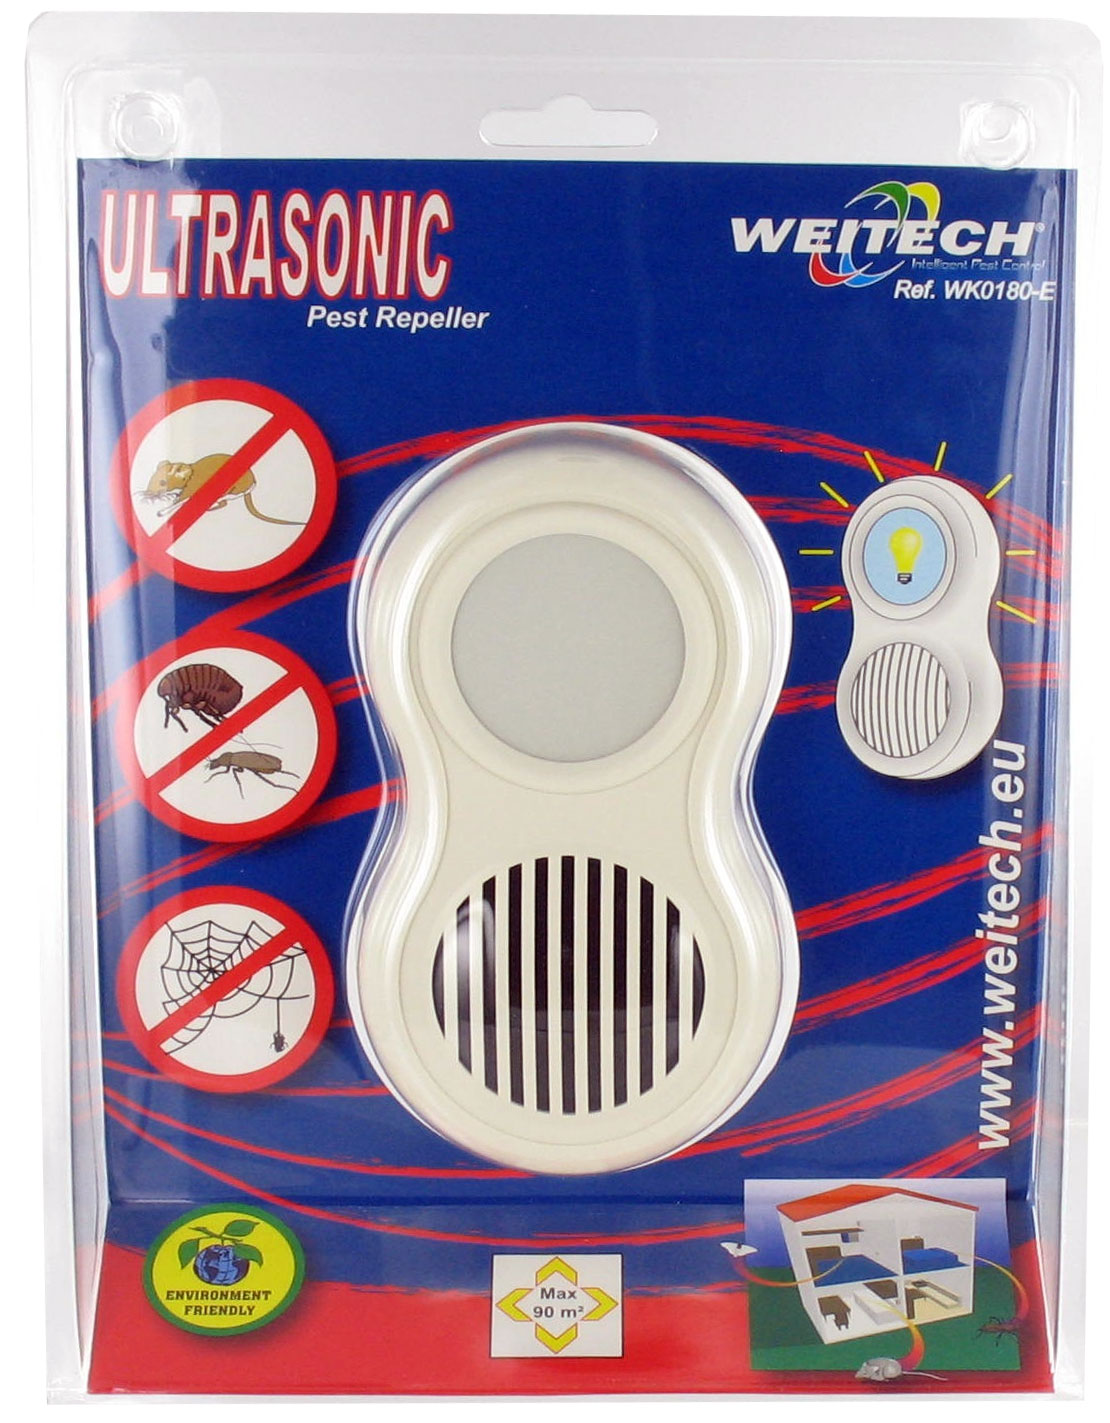 Ultrasonic pest alarm 90m2 Weitech